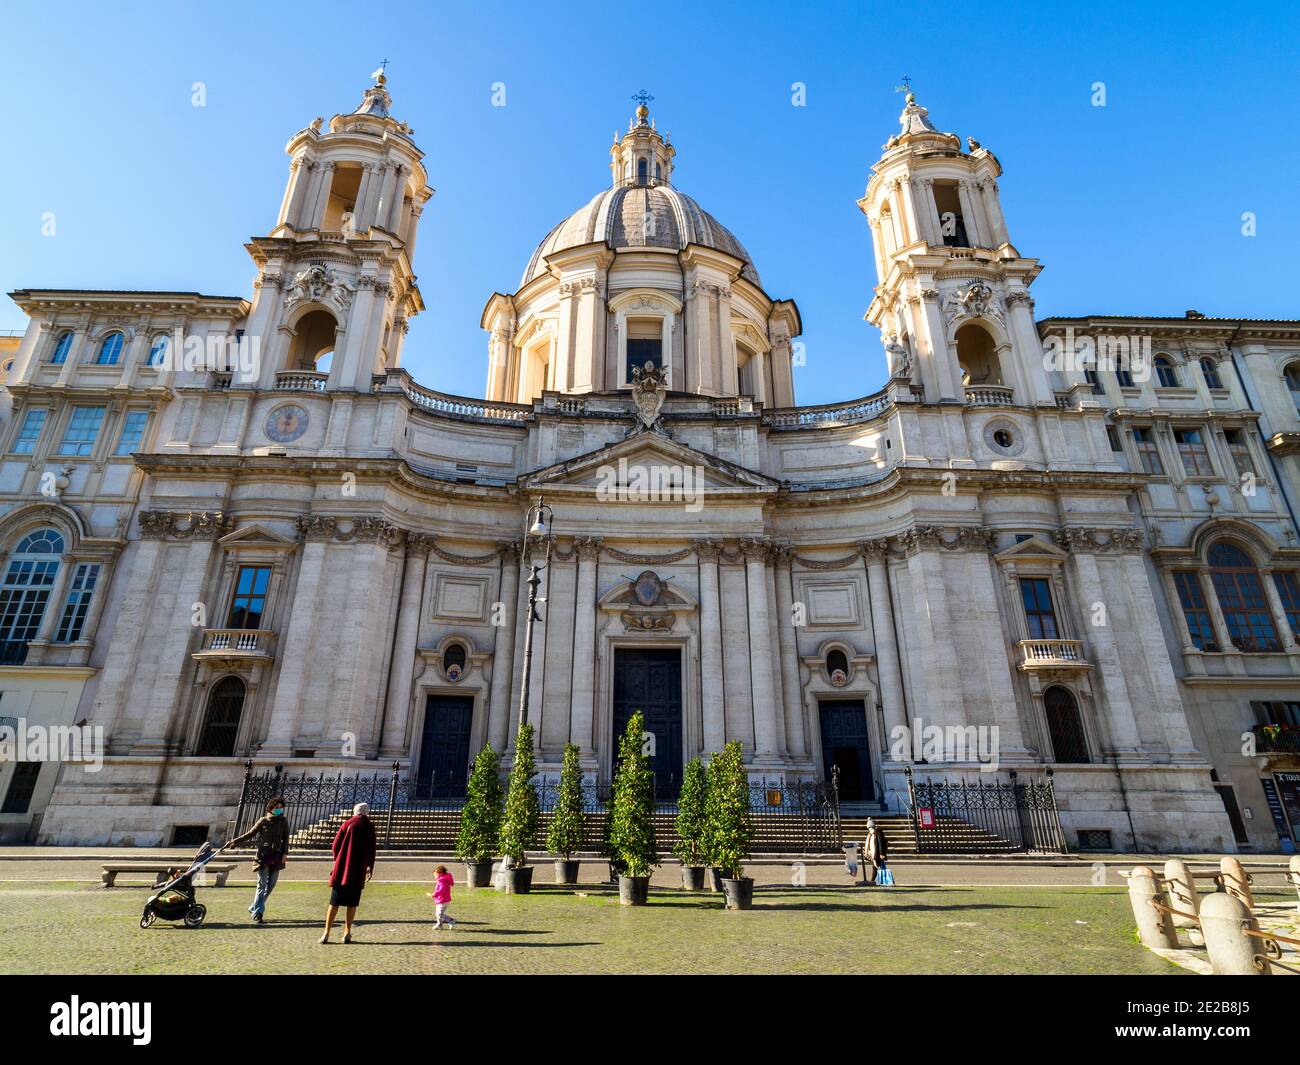 Sant'Agnese in Agone church in Piazza Navona - Rome, Italy Stock Photo